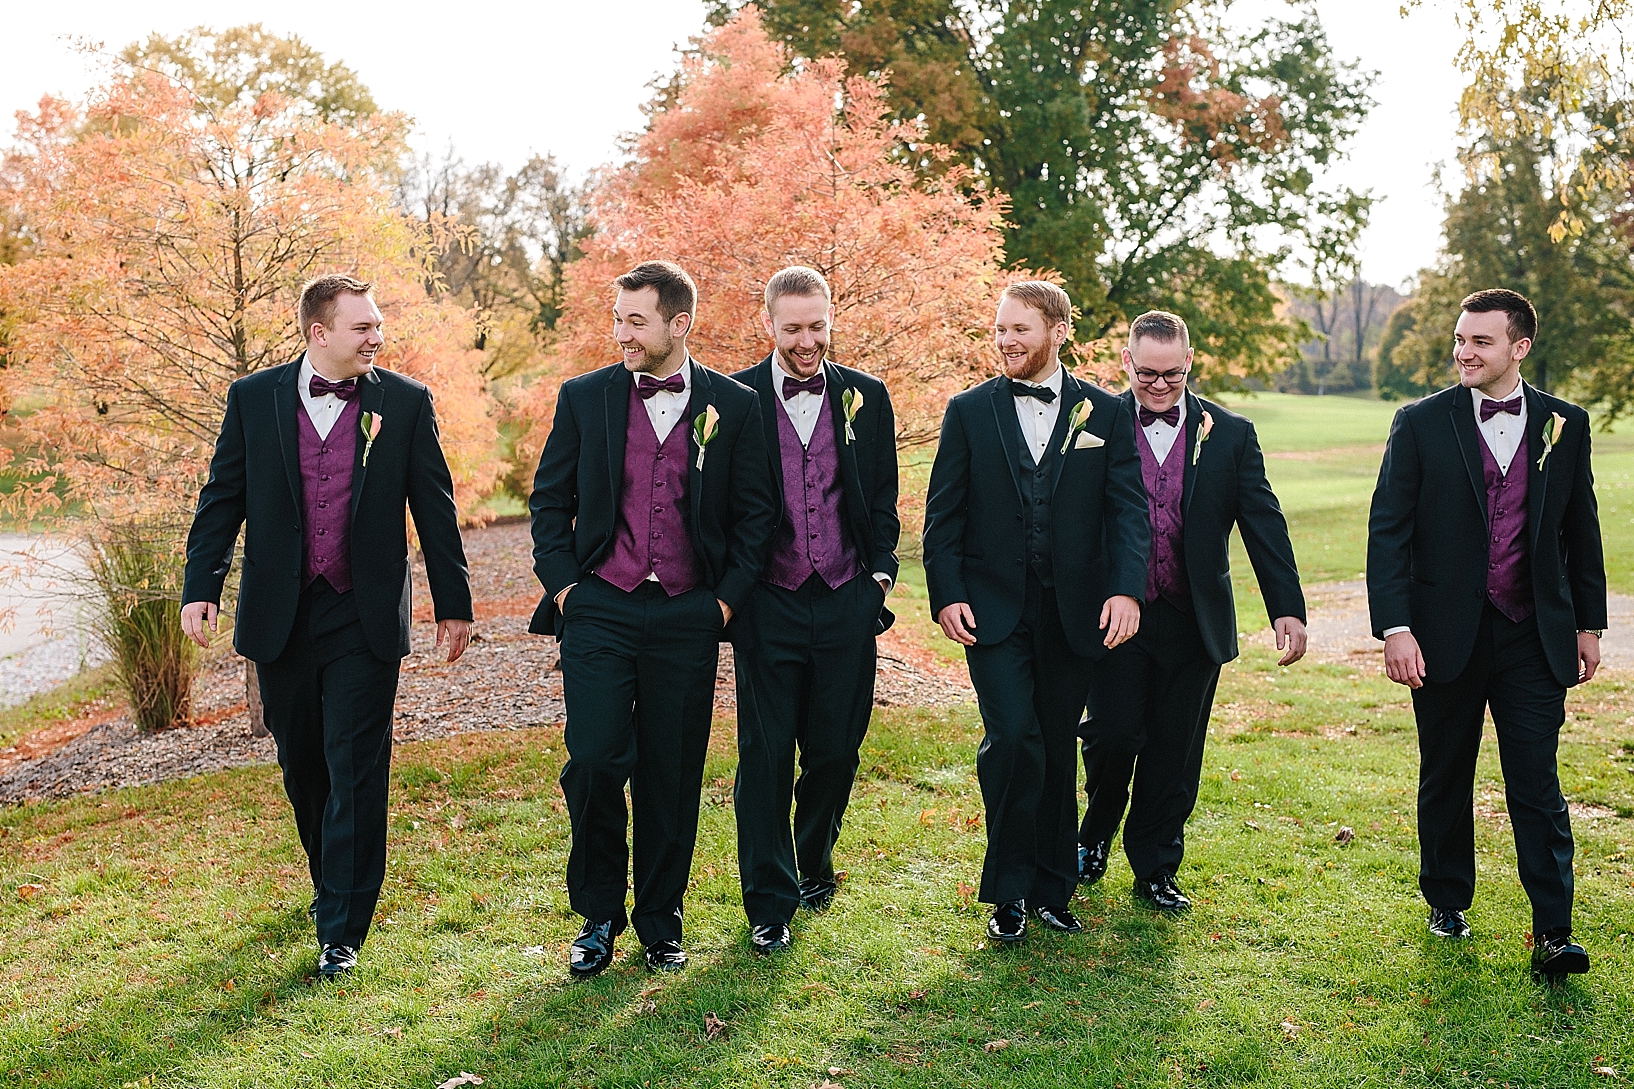 groomsmen in tuxes and wine vests walking across lawn